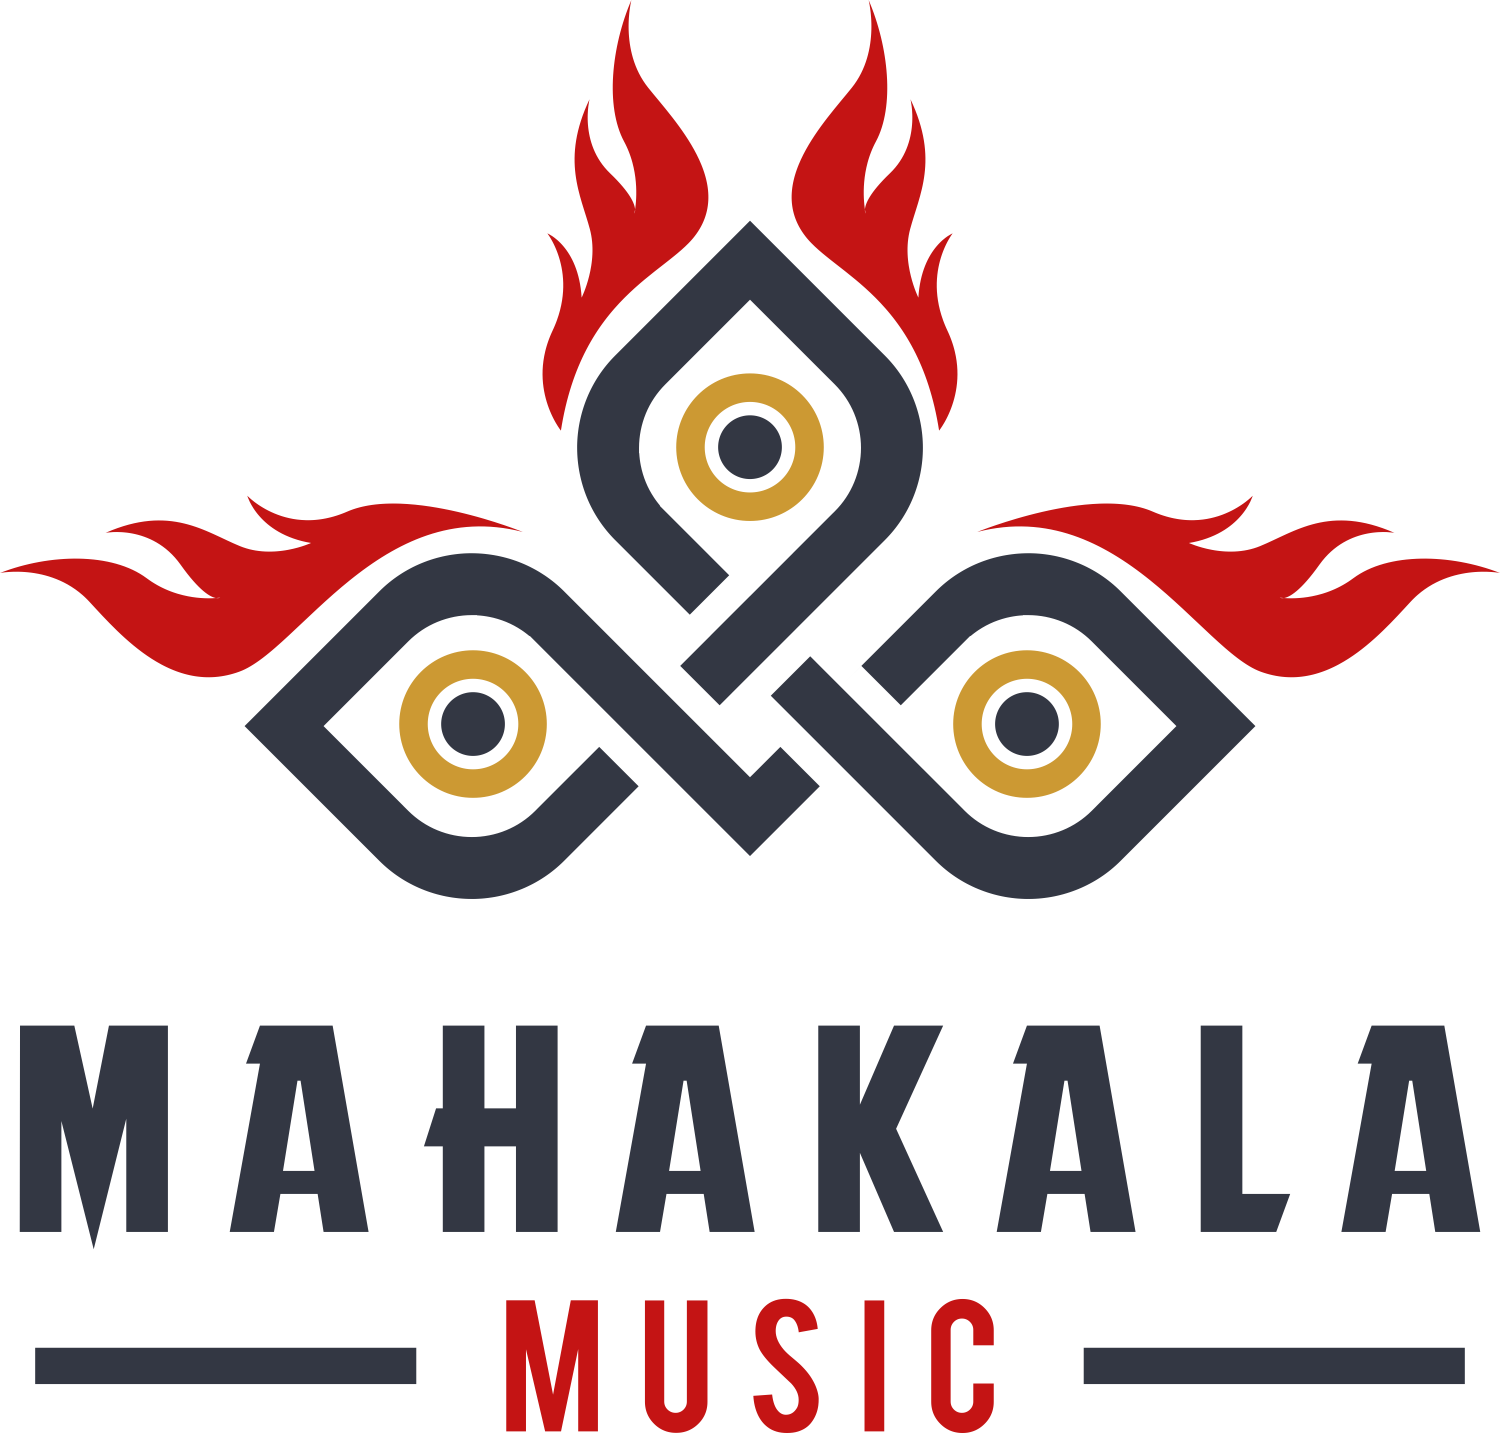 mahakala music